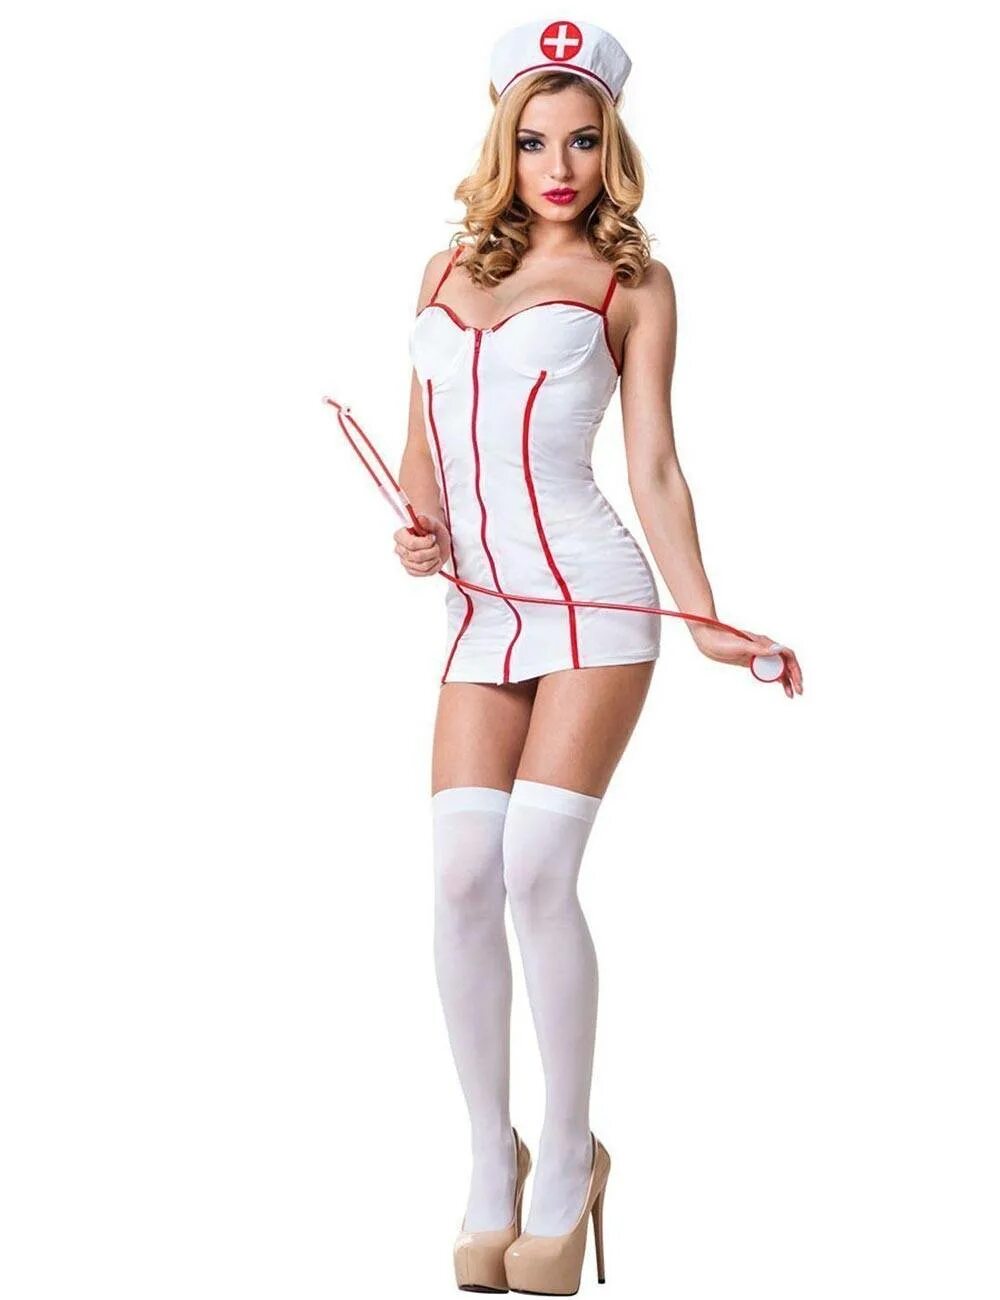 Le Frivole костюм медсестры. Костюм медсестра LXL (46-48). Костюм le Frivole 02206. Медсестры черные чулки